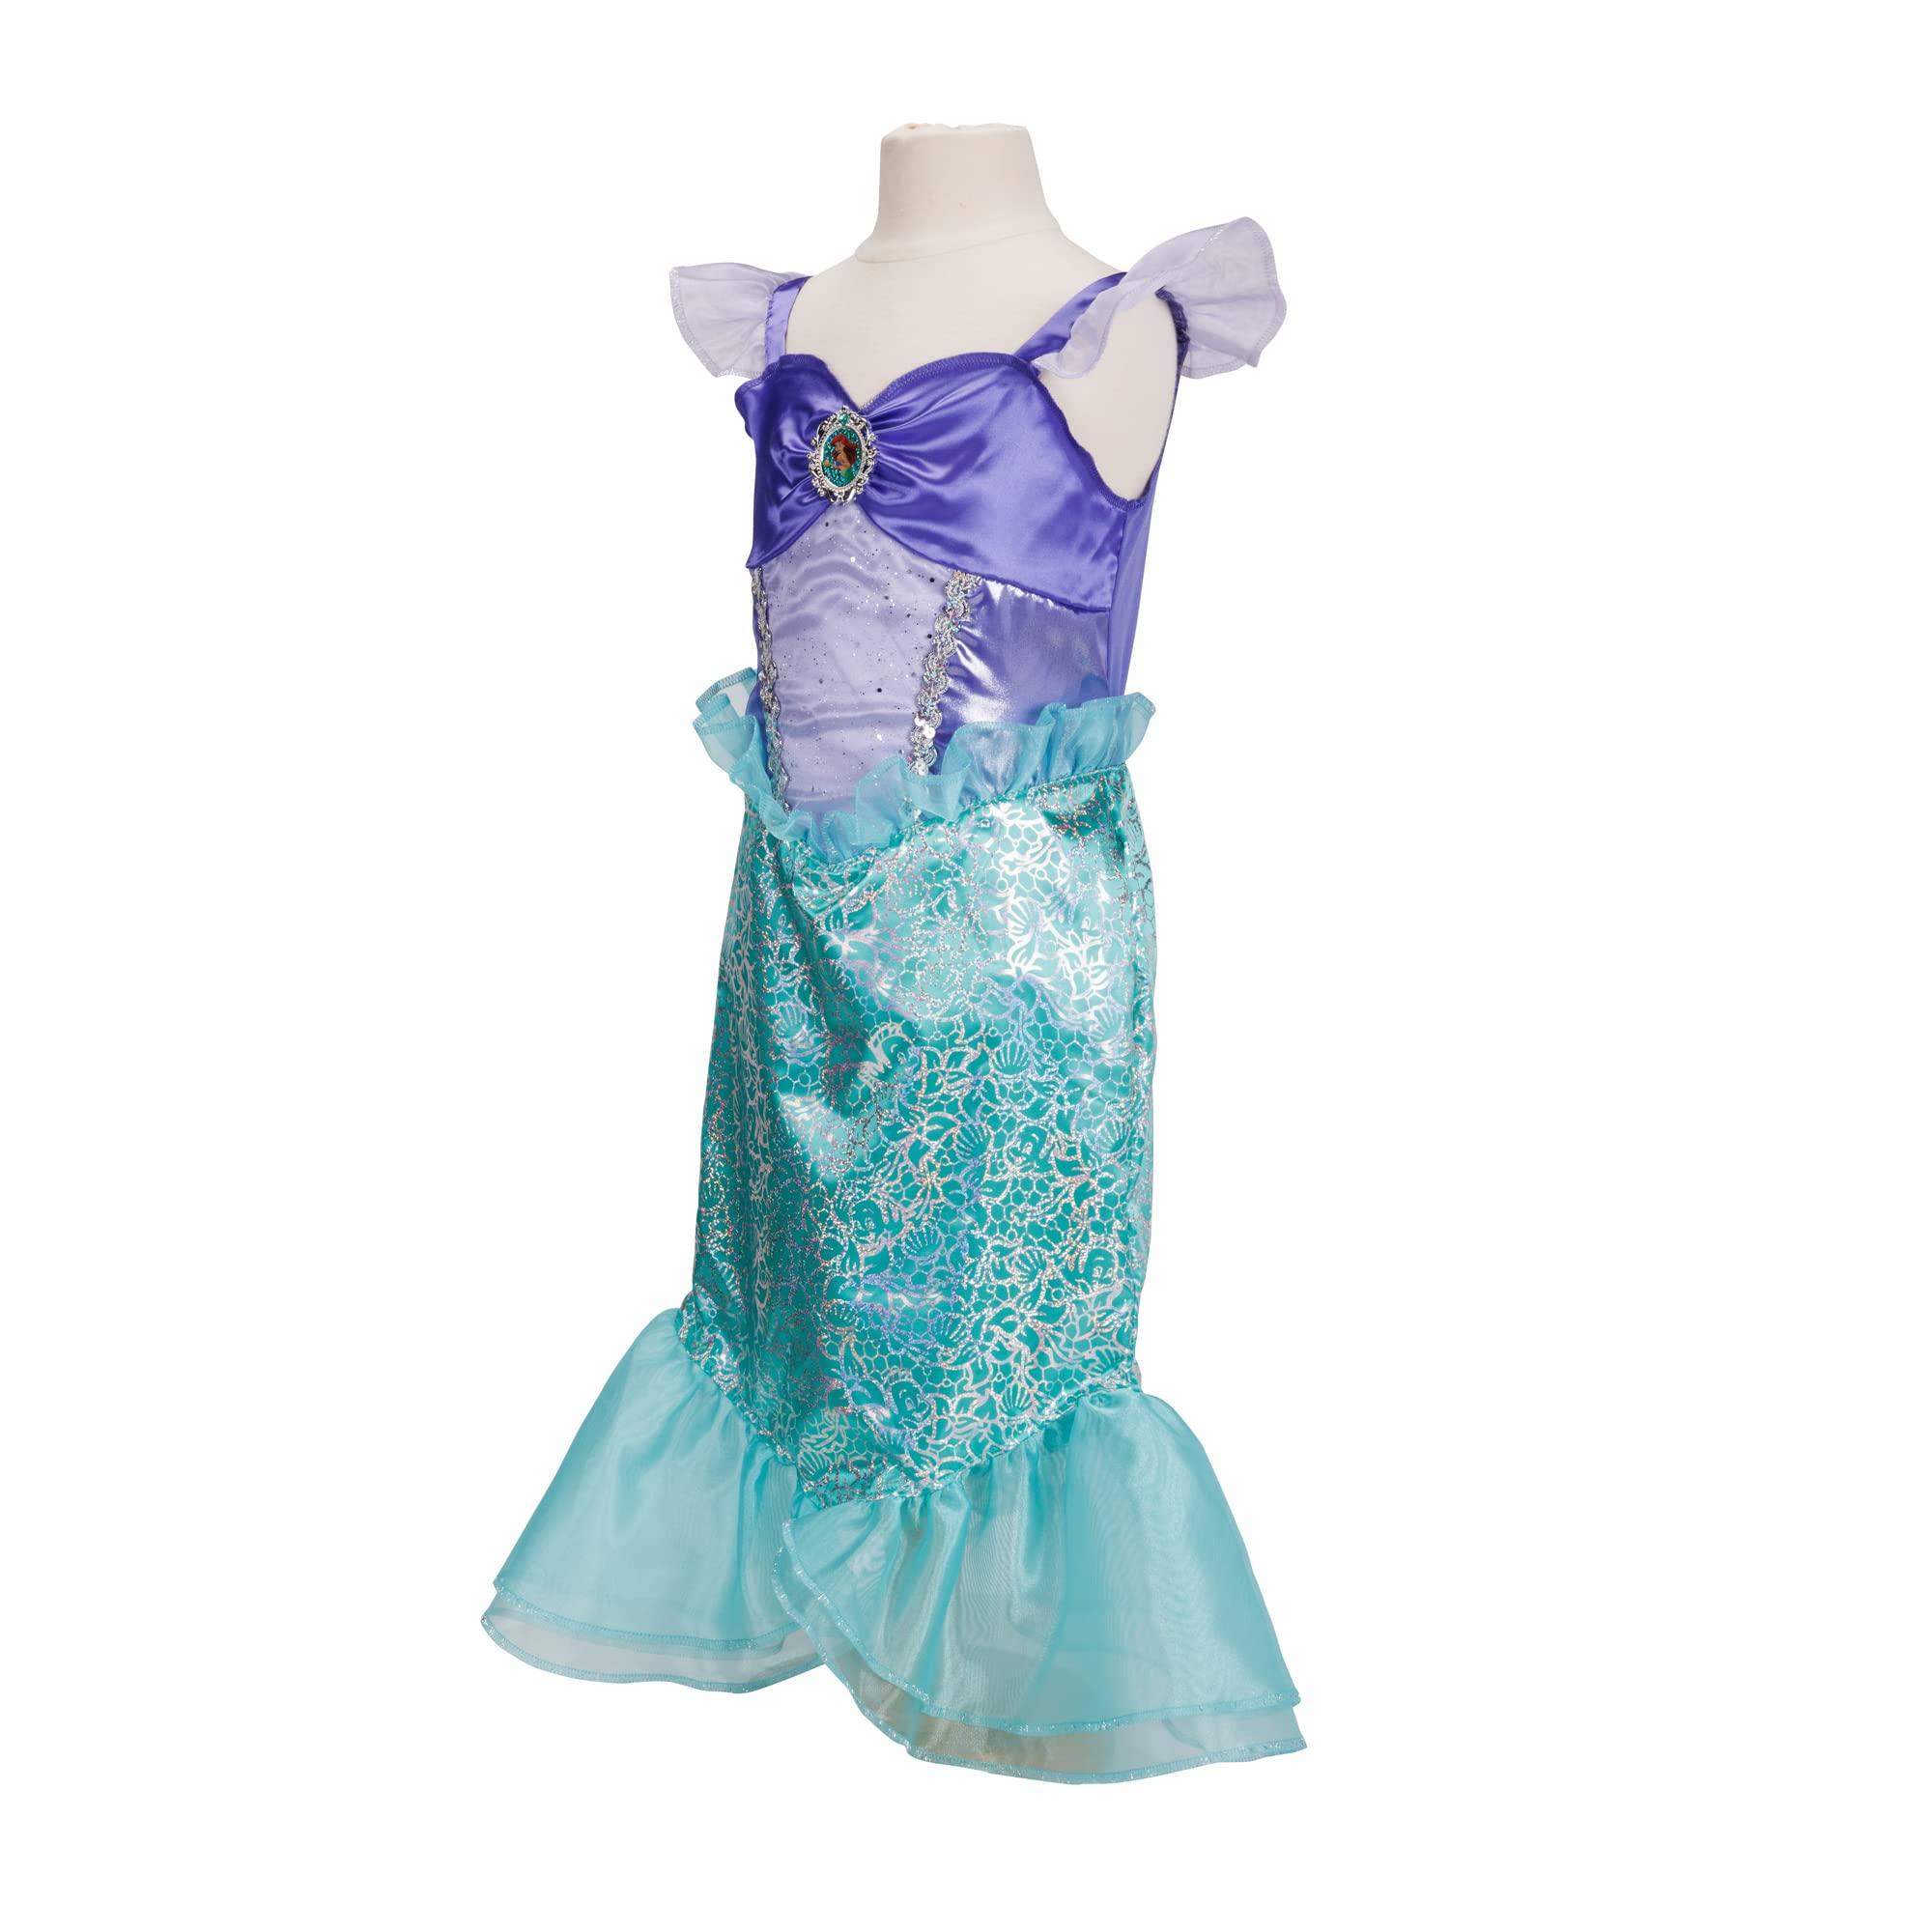 Disney Princess Ariel Dress Beautiful Holofoil Print with Platinum Finish, Celebrate Disney 100 Years of Wonder! Child Size 4-6X